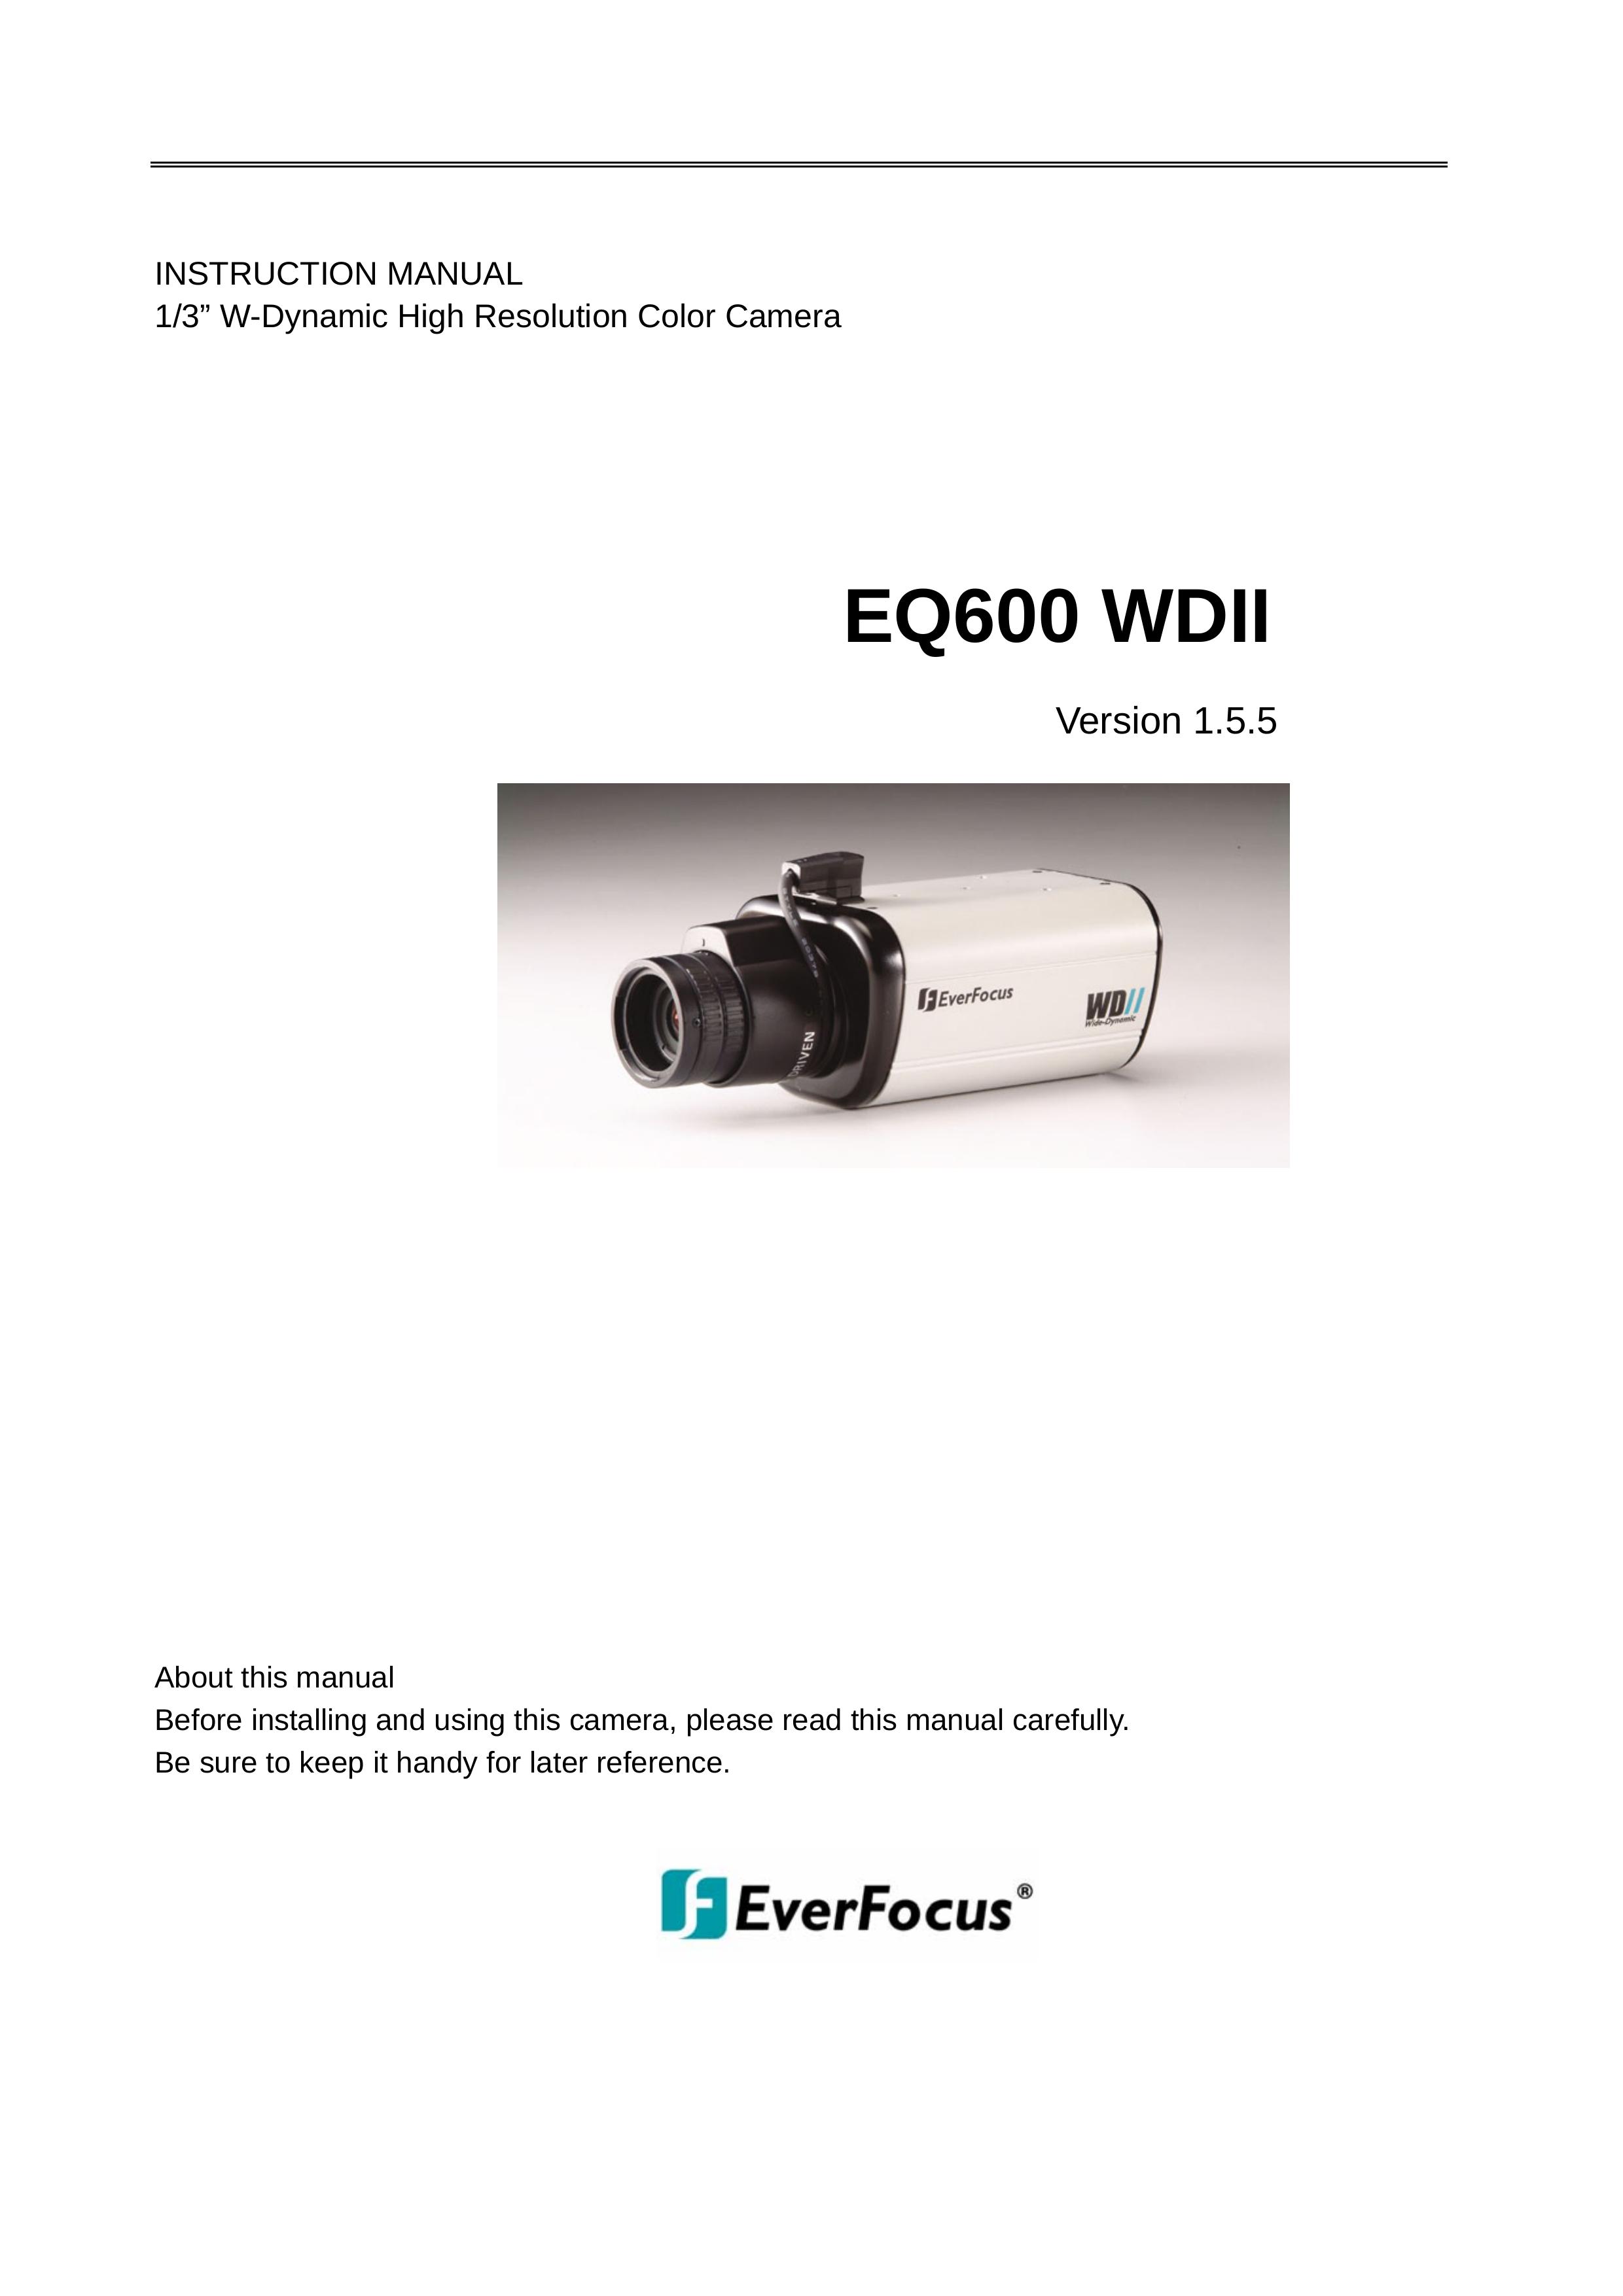 EverFocus EQ600 WDII Digital Camera User Manual